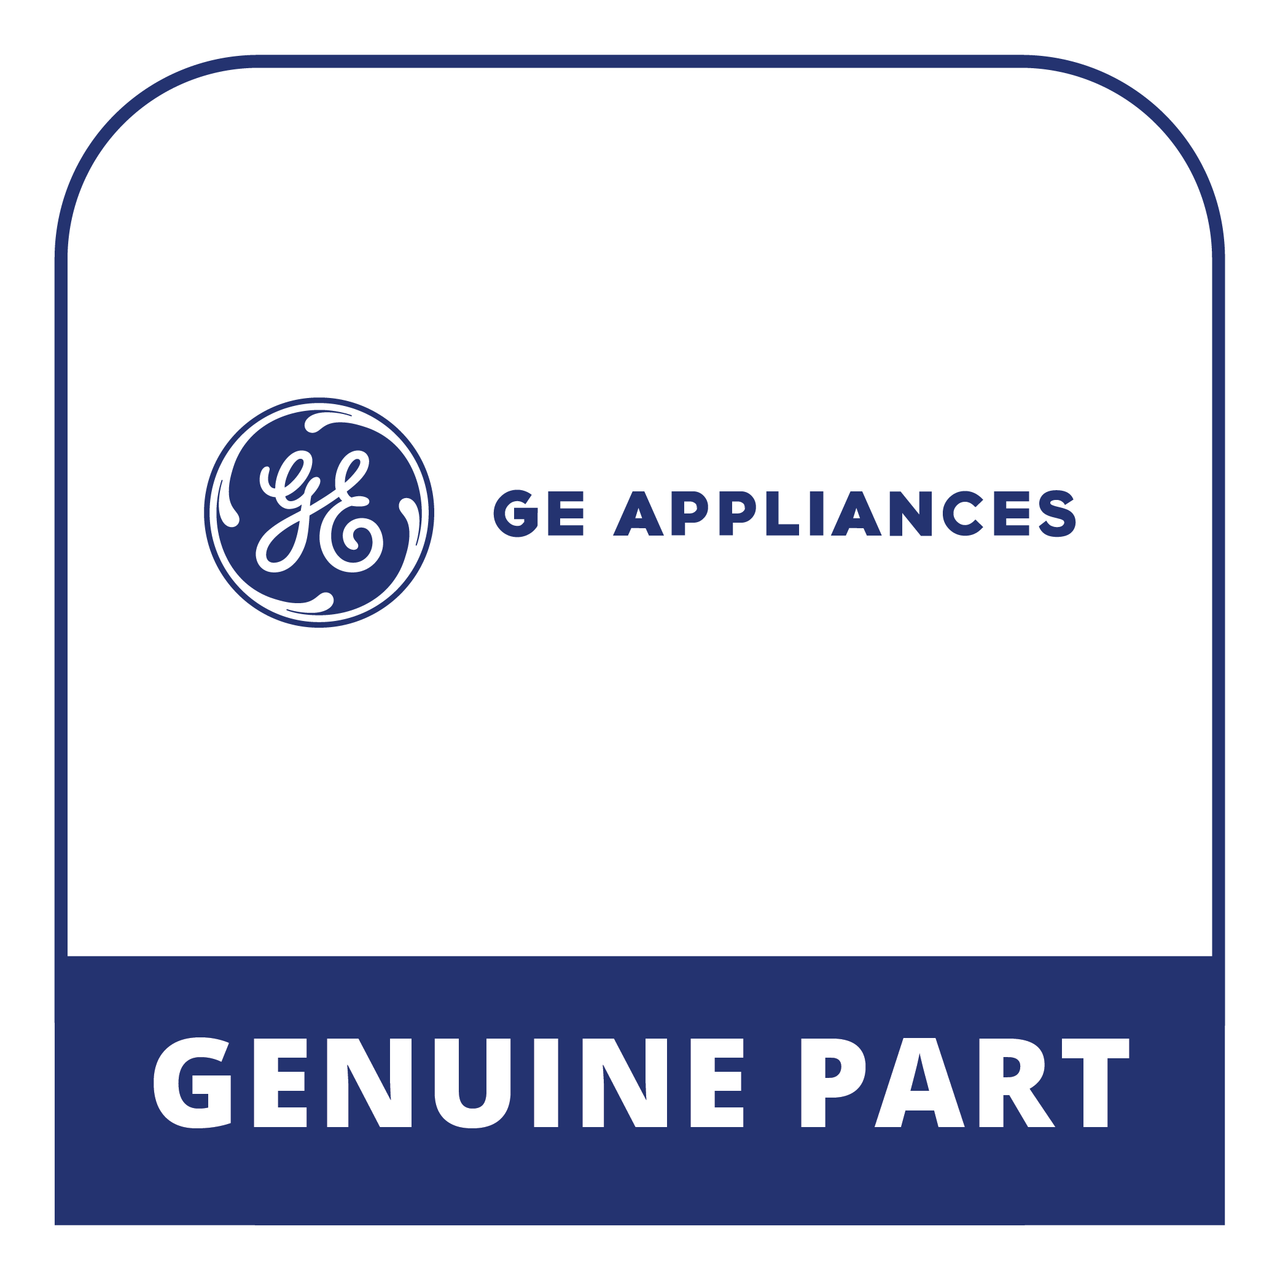 GE Appliances 24L13 - 105020-14 Manifold Uln Nozzle Assy - Genuine Part